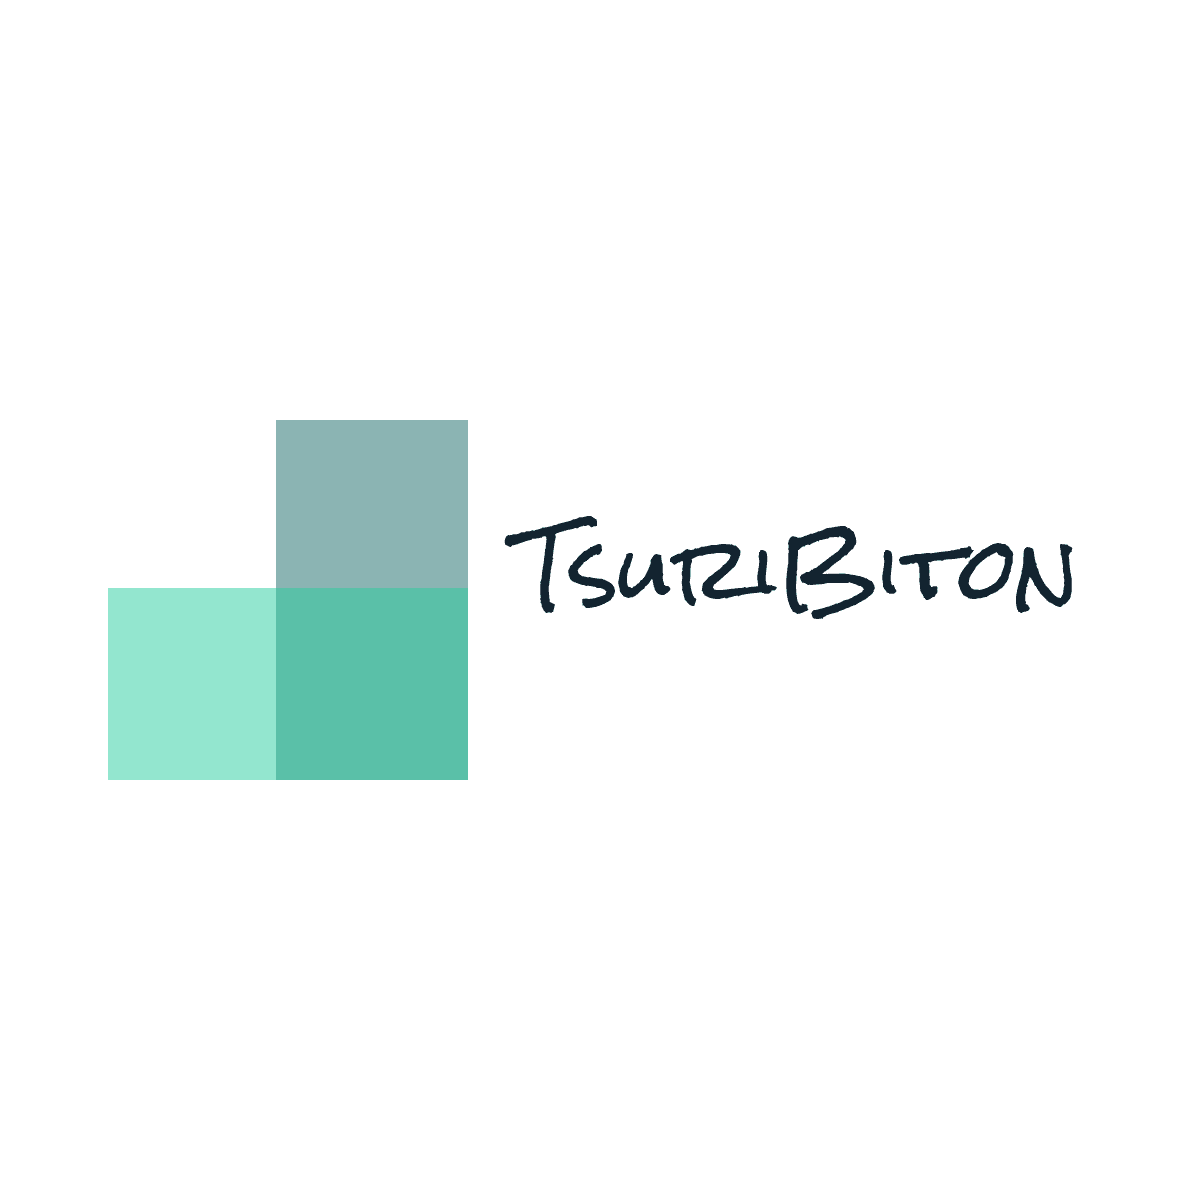 TsuriBitonのサイトロゴ